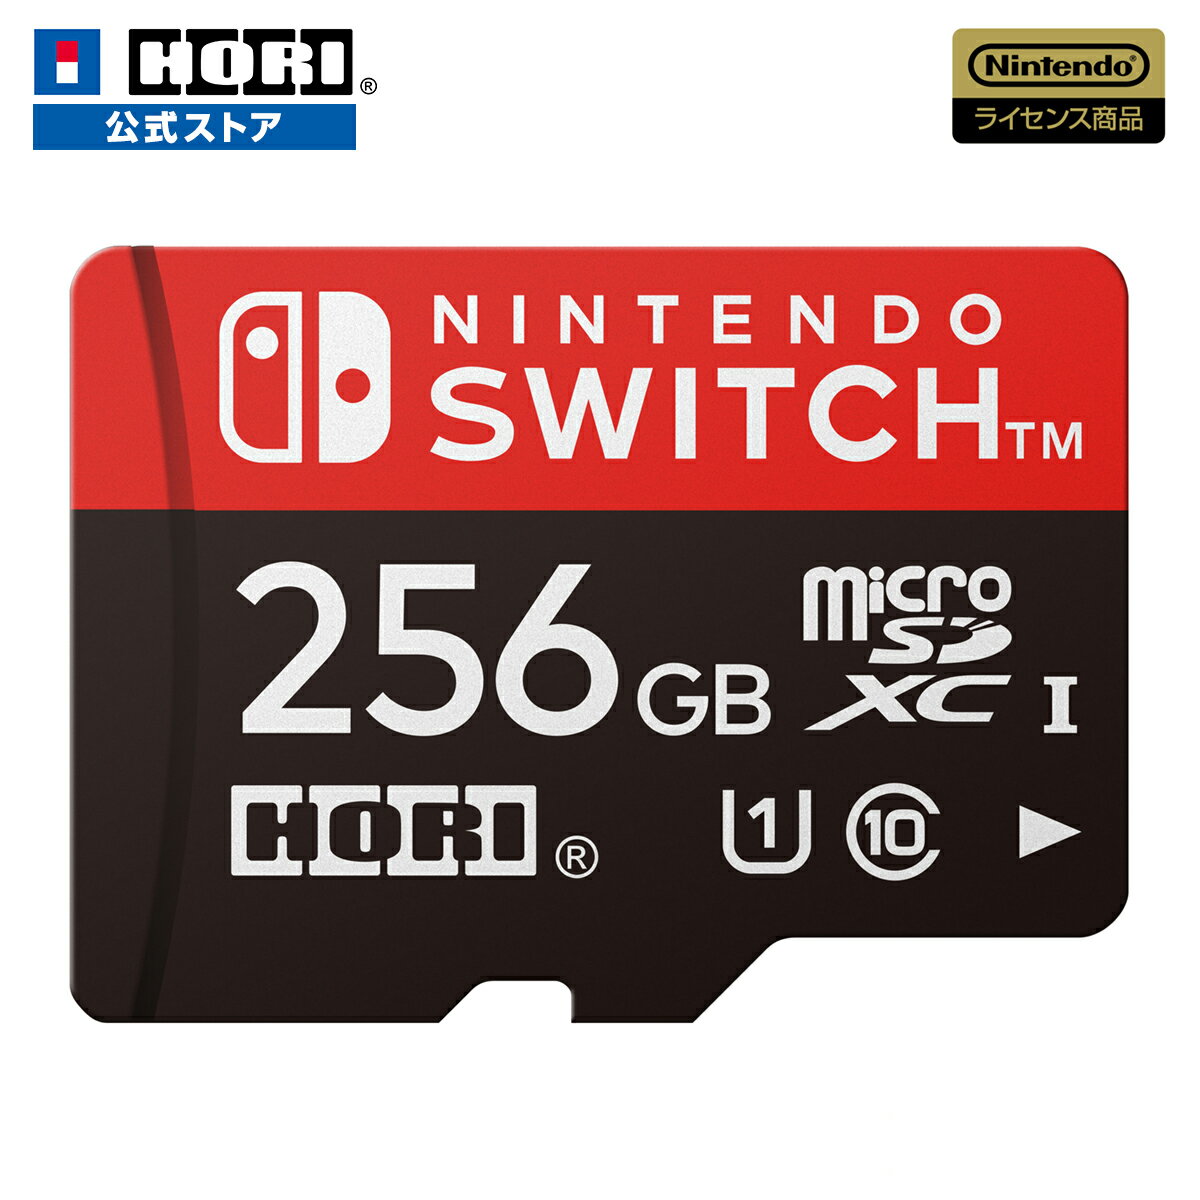 microSDカード for Nintendo Switch 256GB NSW-086 NintendoSwitch 任天堂 SDカード HORI ホリ ゲーム ストレージ ダウンロード